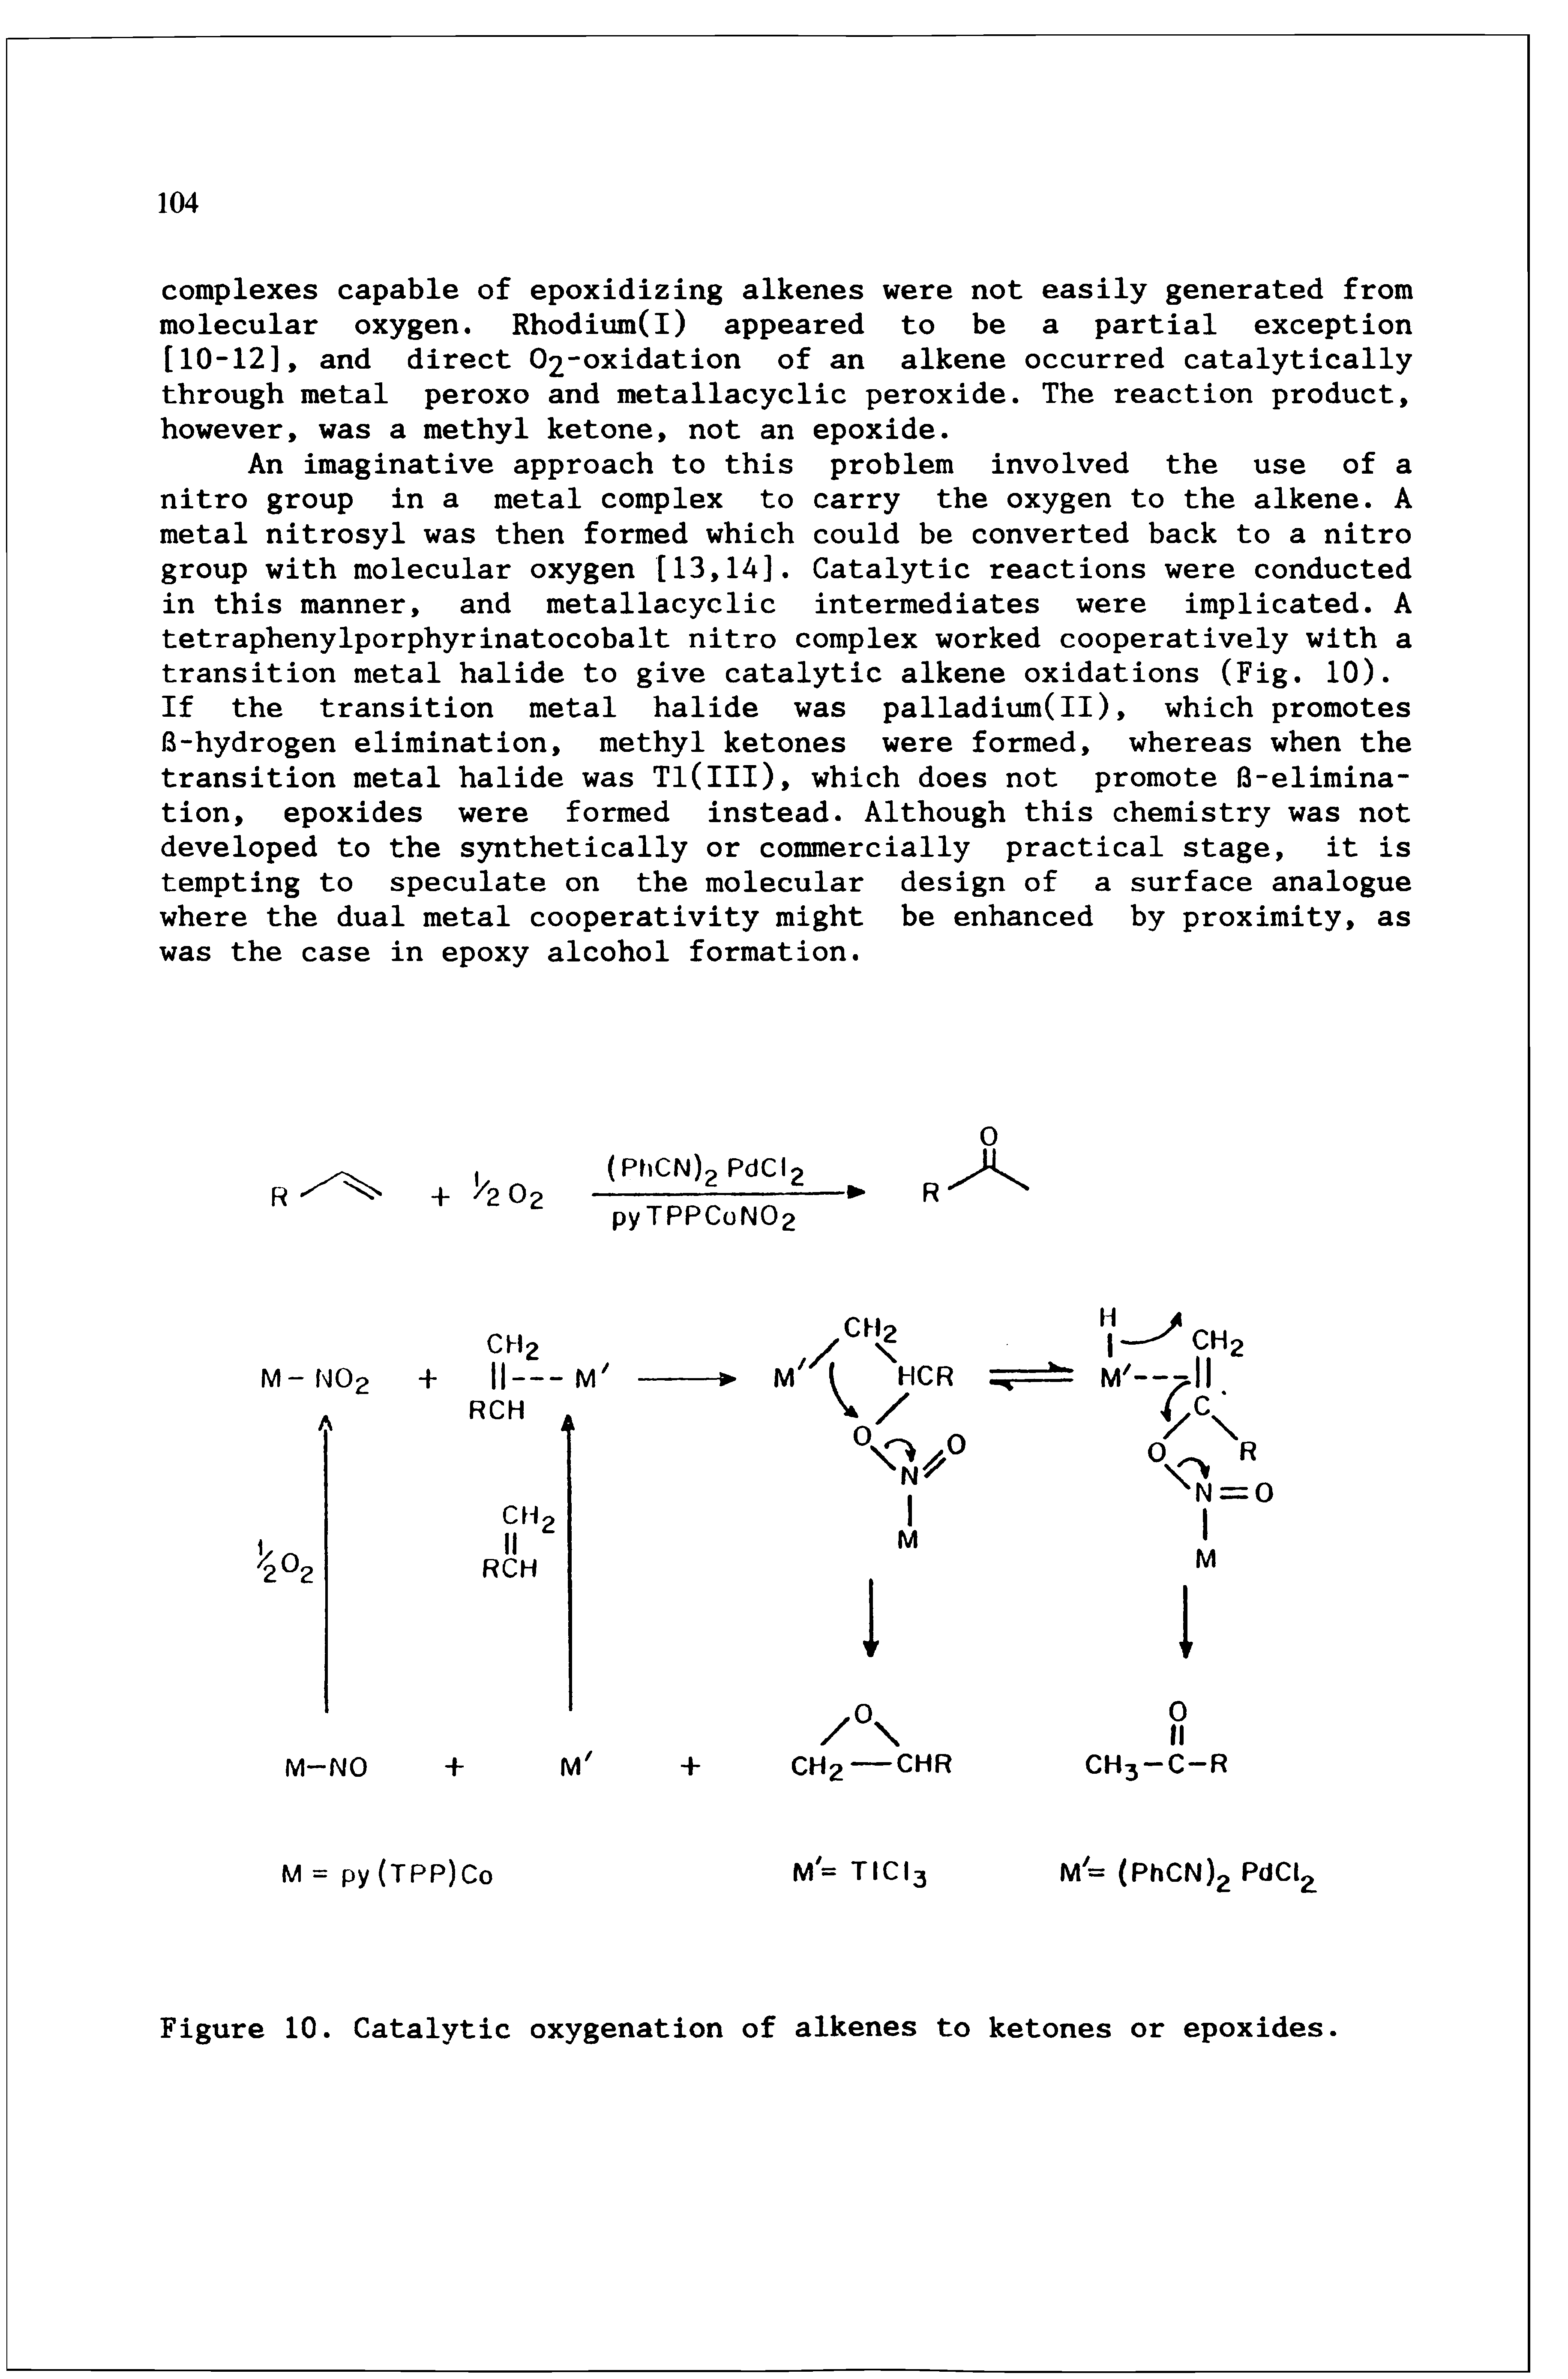 Figure 10. Catalytic oxygenation of alkenes to ketones or epoxides.